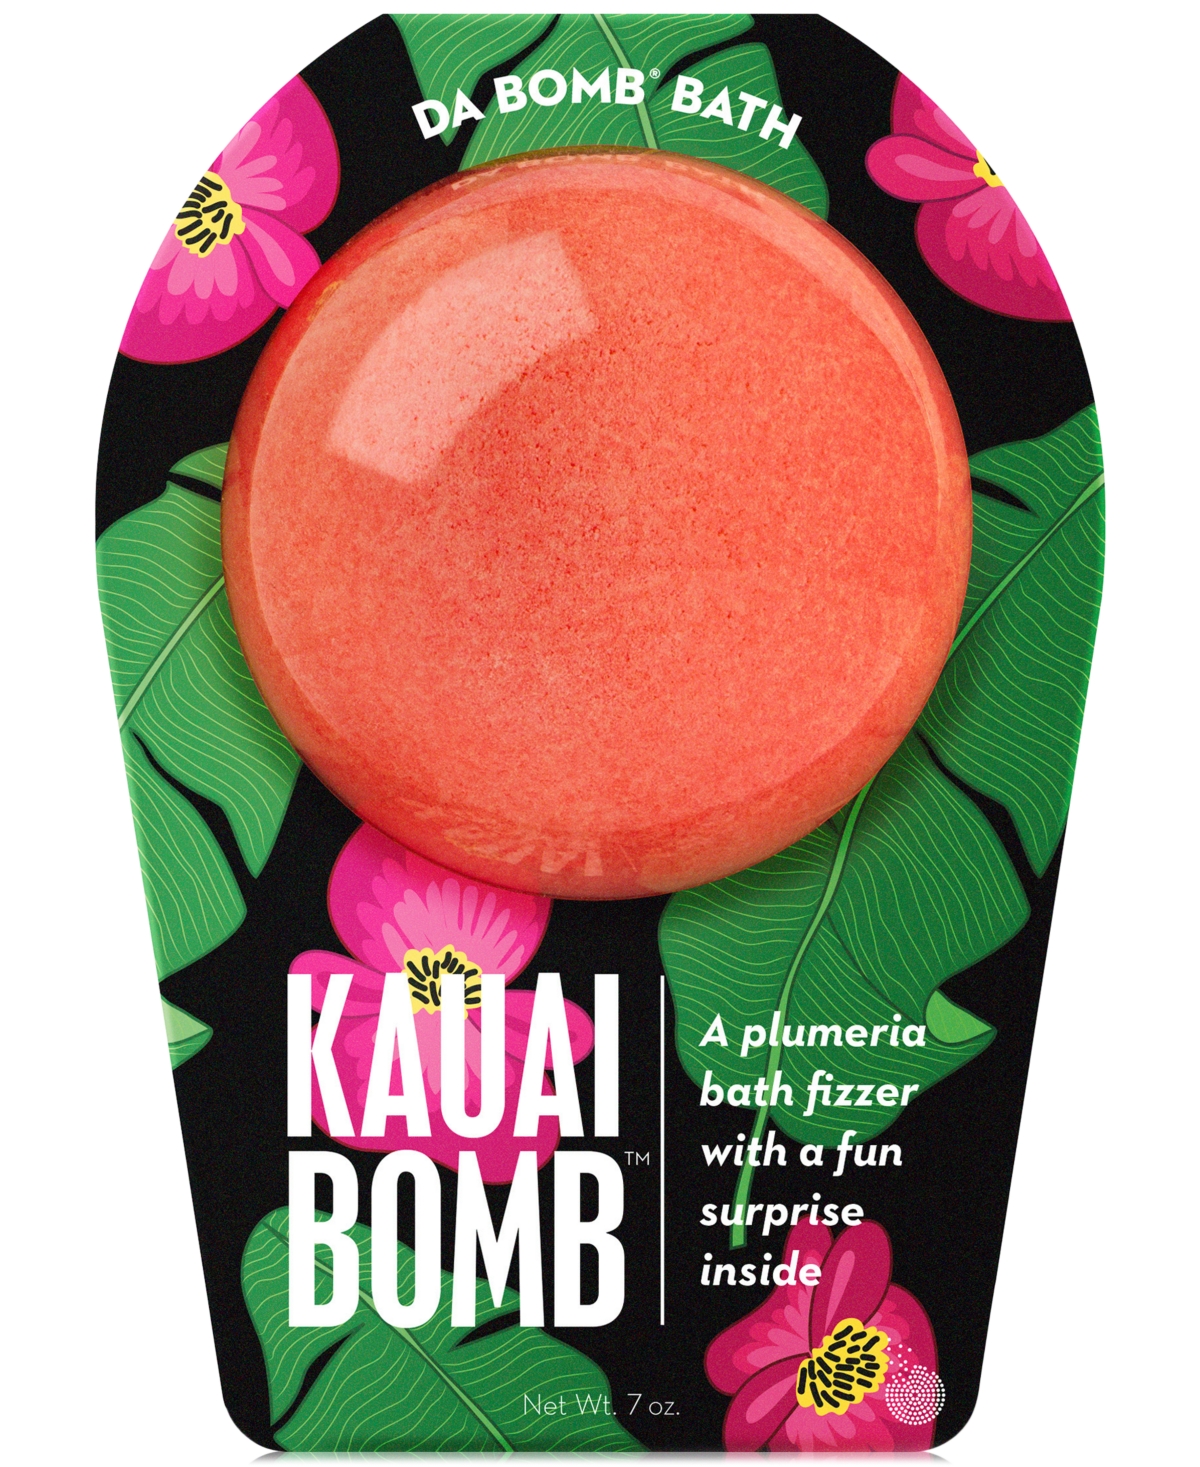 Kauai Bath Bomb, 7 oz. - Kauai Bomb